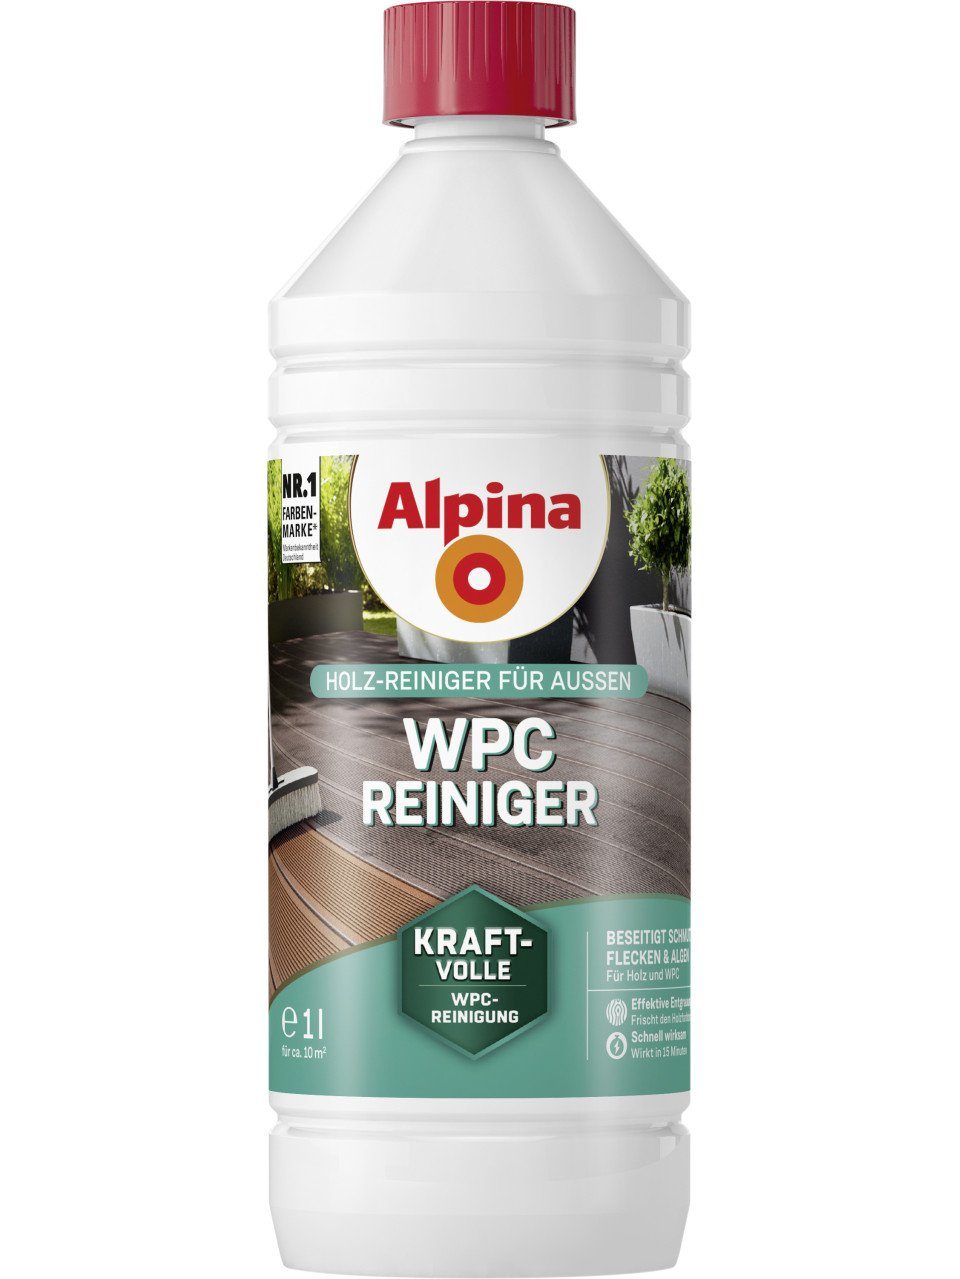 Alpina Alpina WPC-Reiniger 1 L farblos Holzpflegeöl